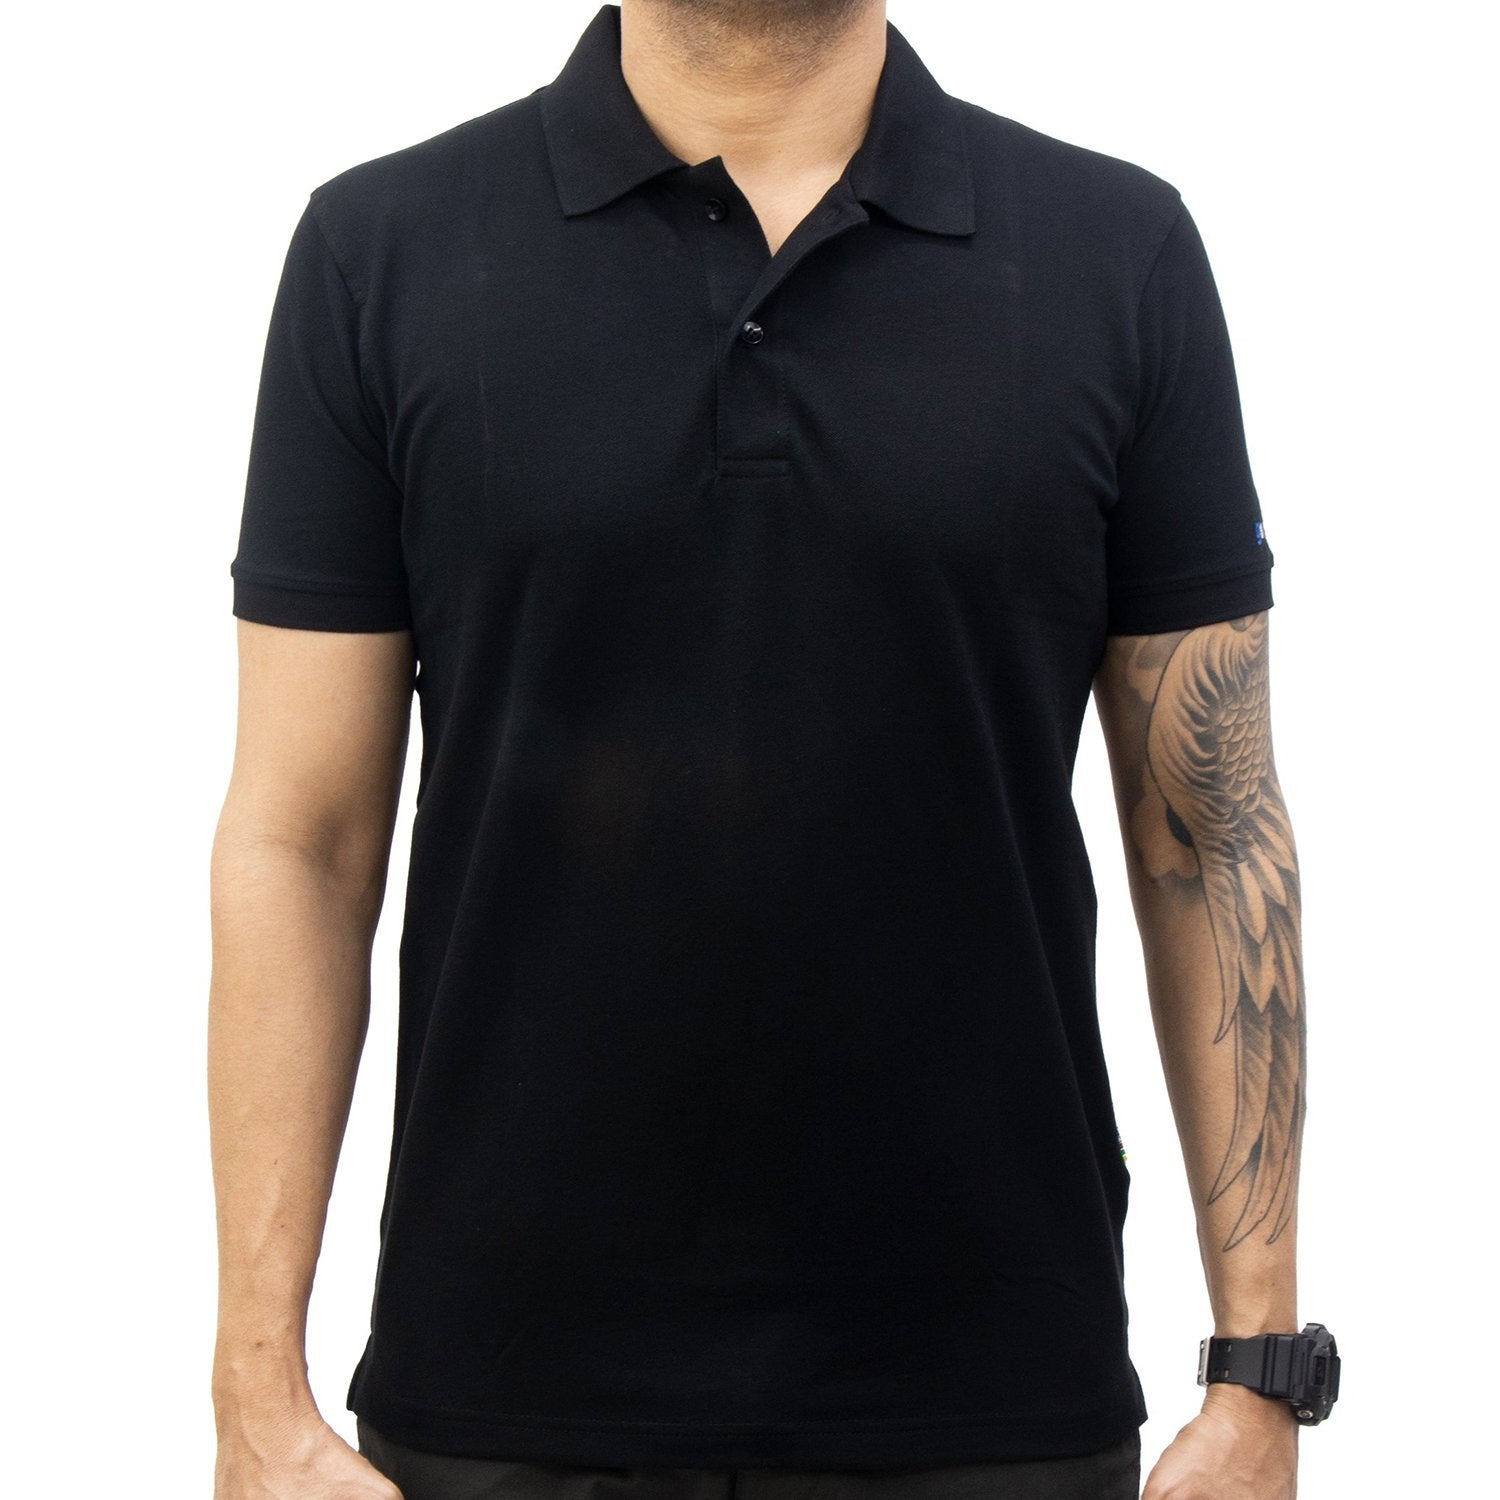 Buy Gokyo Classic Polo Tshirt Black at Gokyo Outdoor Clothing & Gear